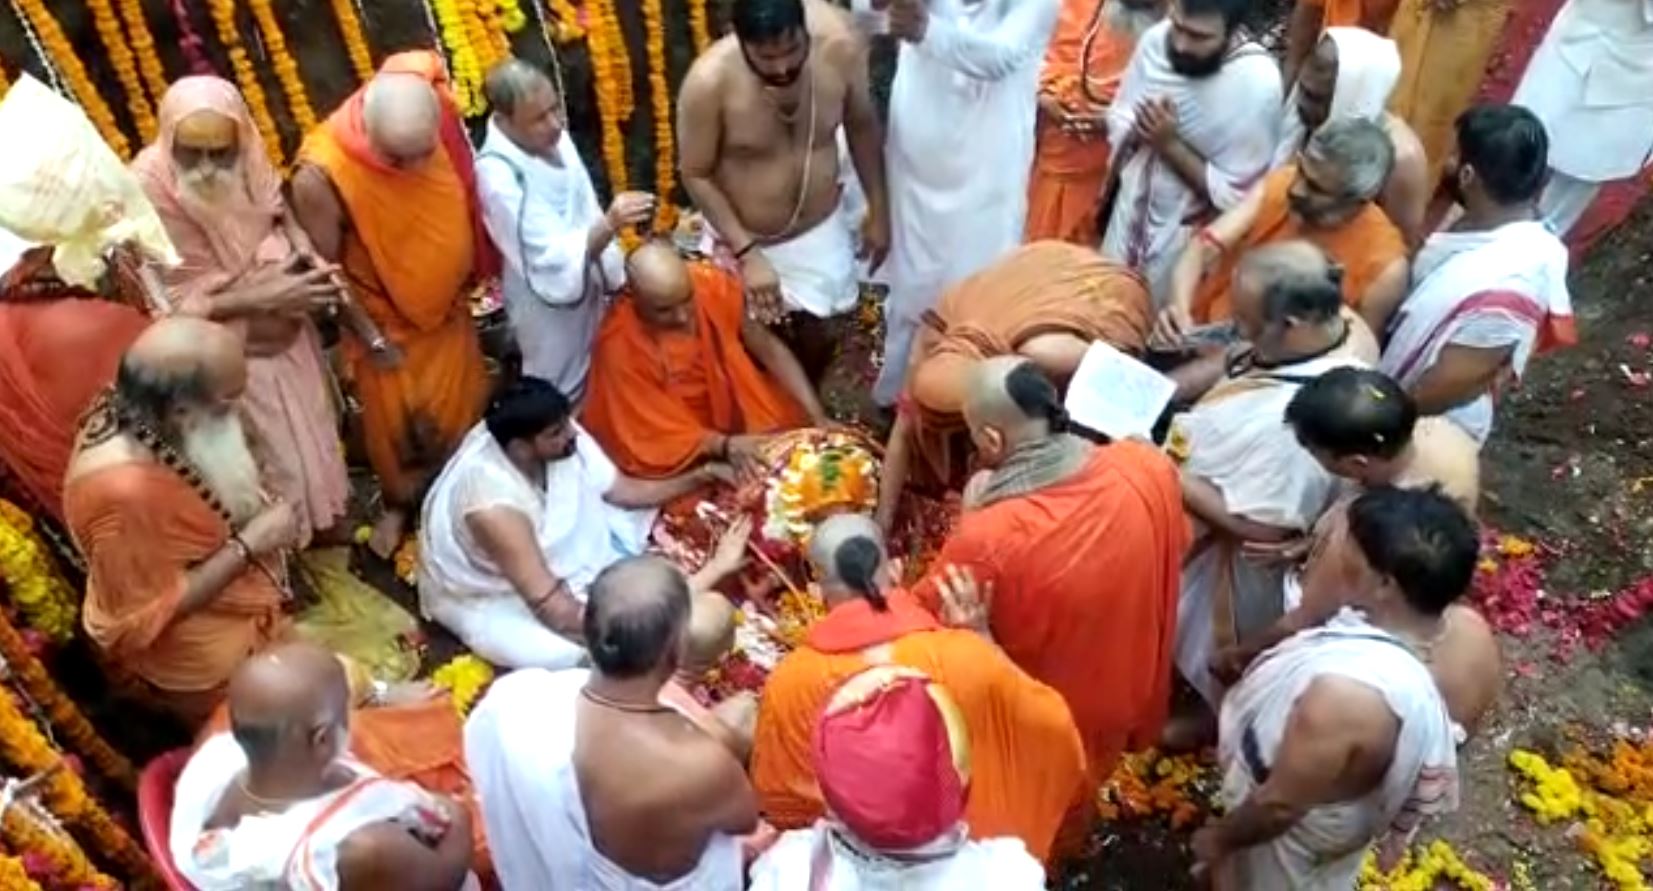 Swami Swaroopanand Saraswati samadhi sthal